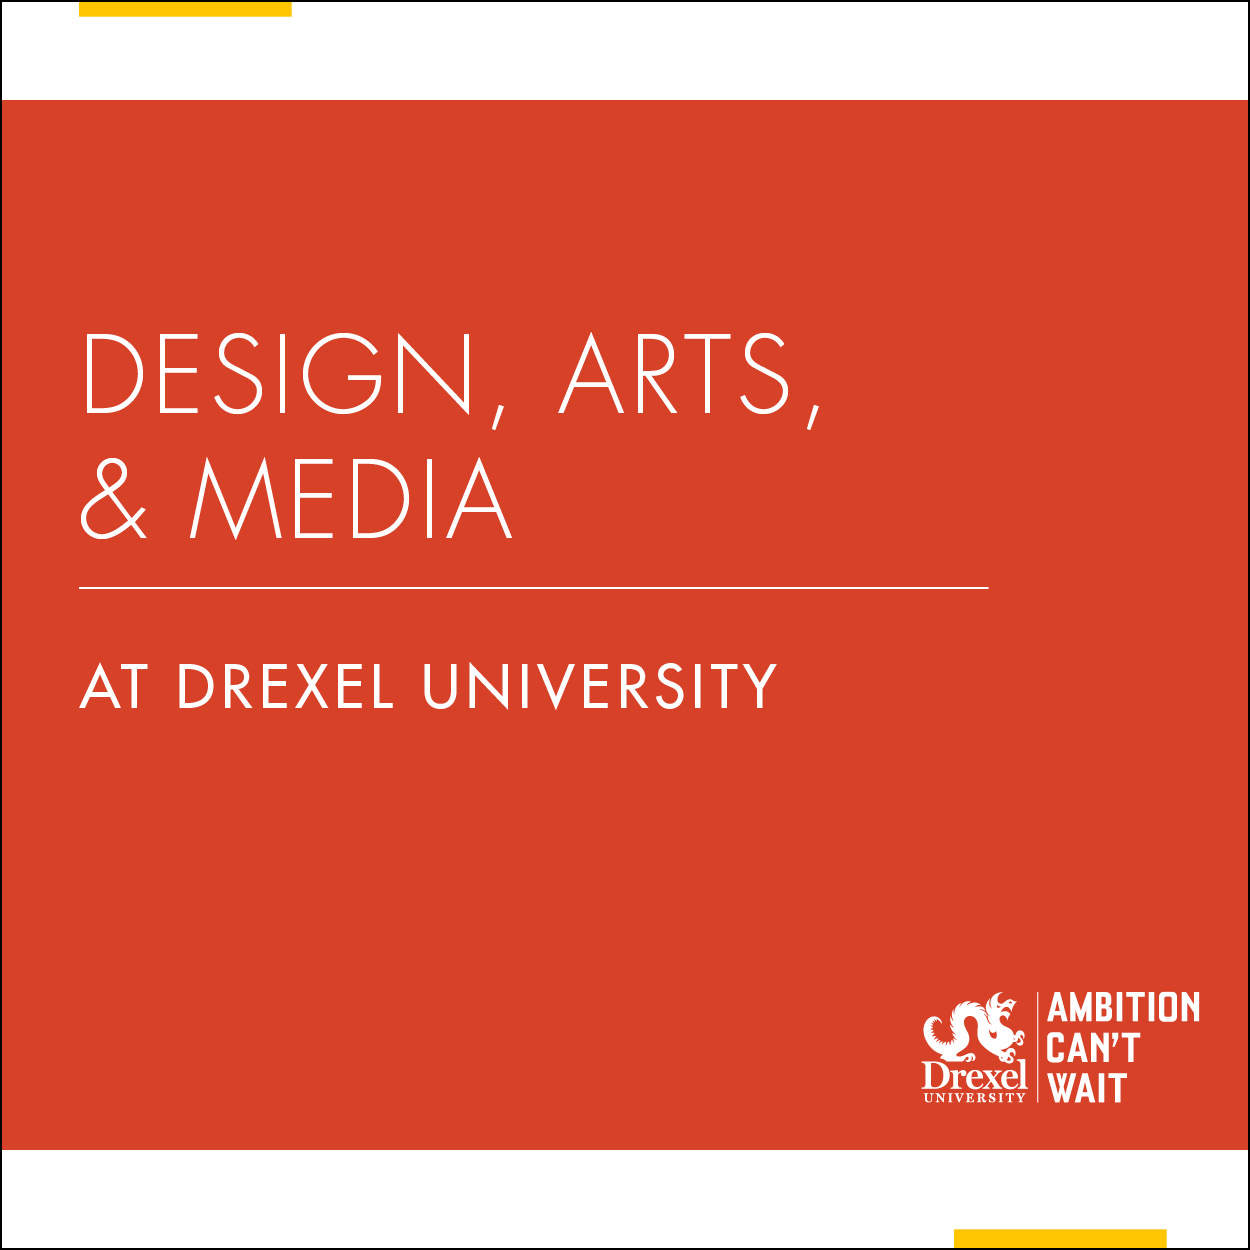 Design, Arts, and Media at Drexel University